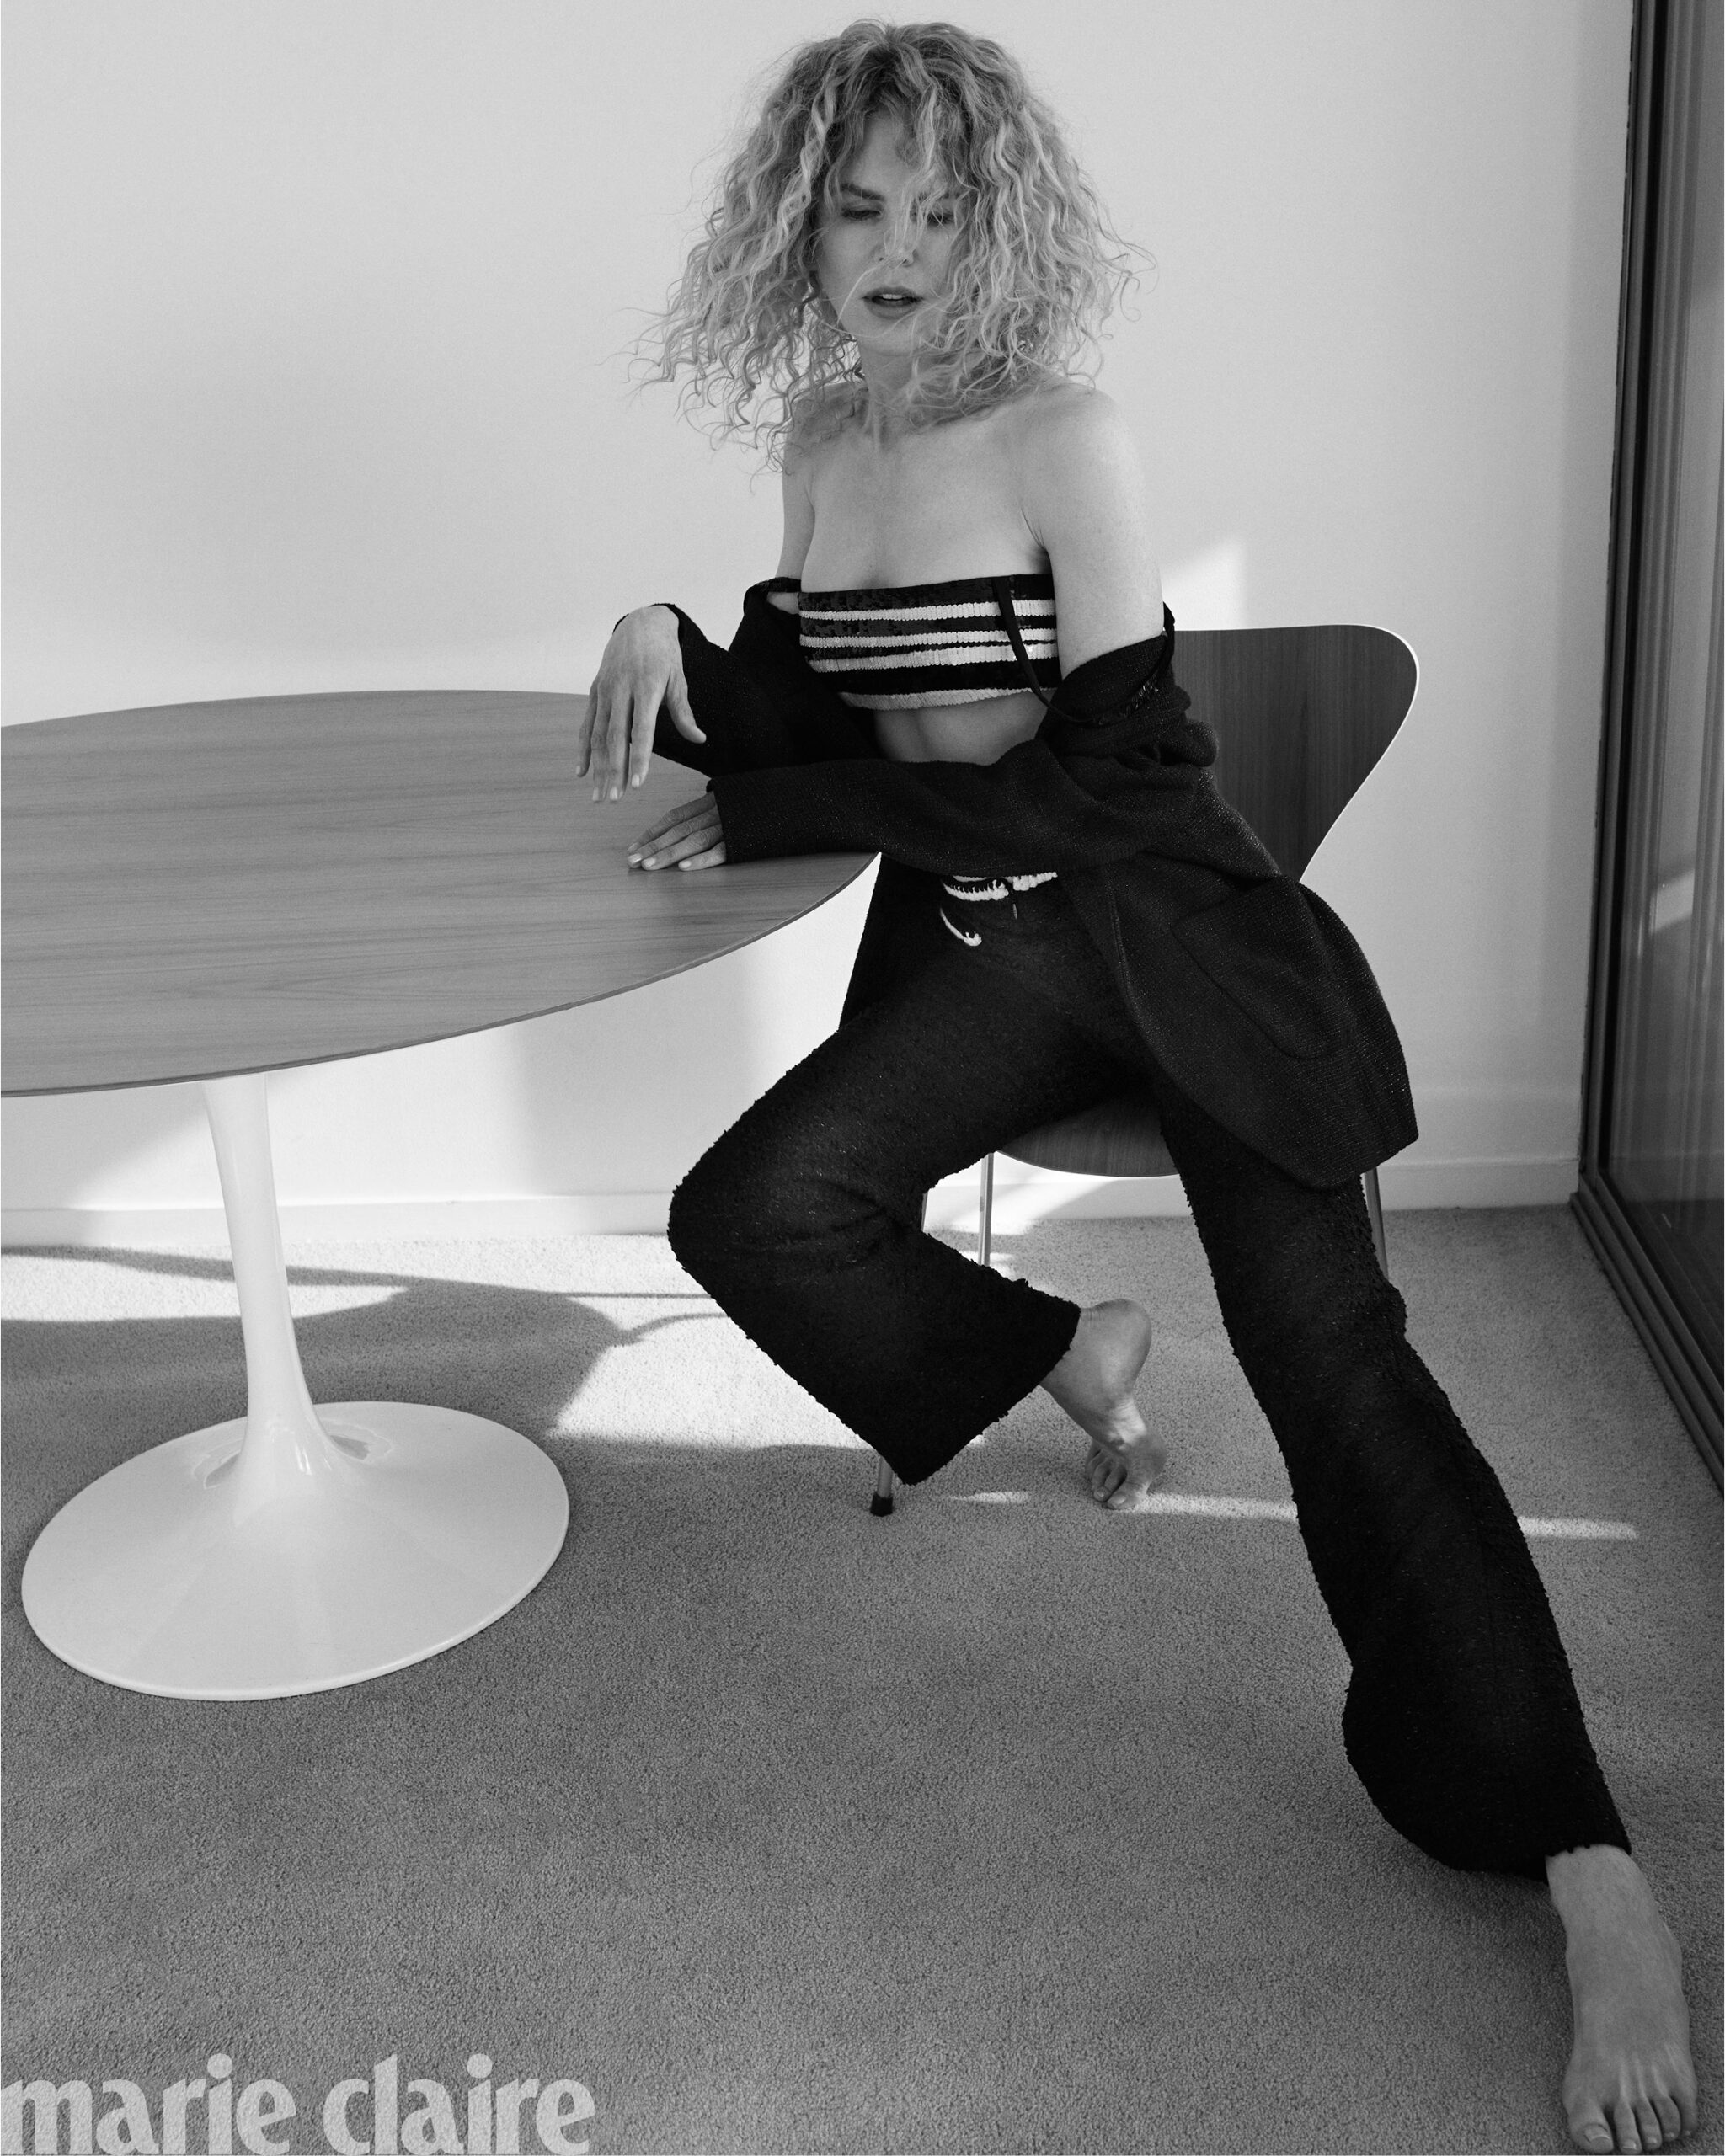 Nicole Kidman for marie claire Australia November 2020.